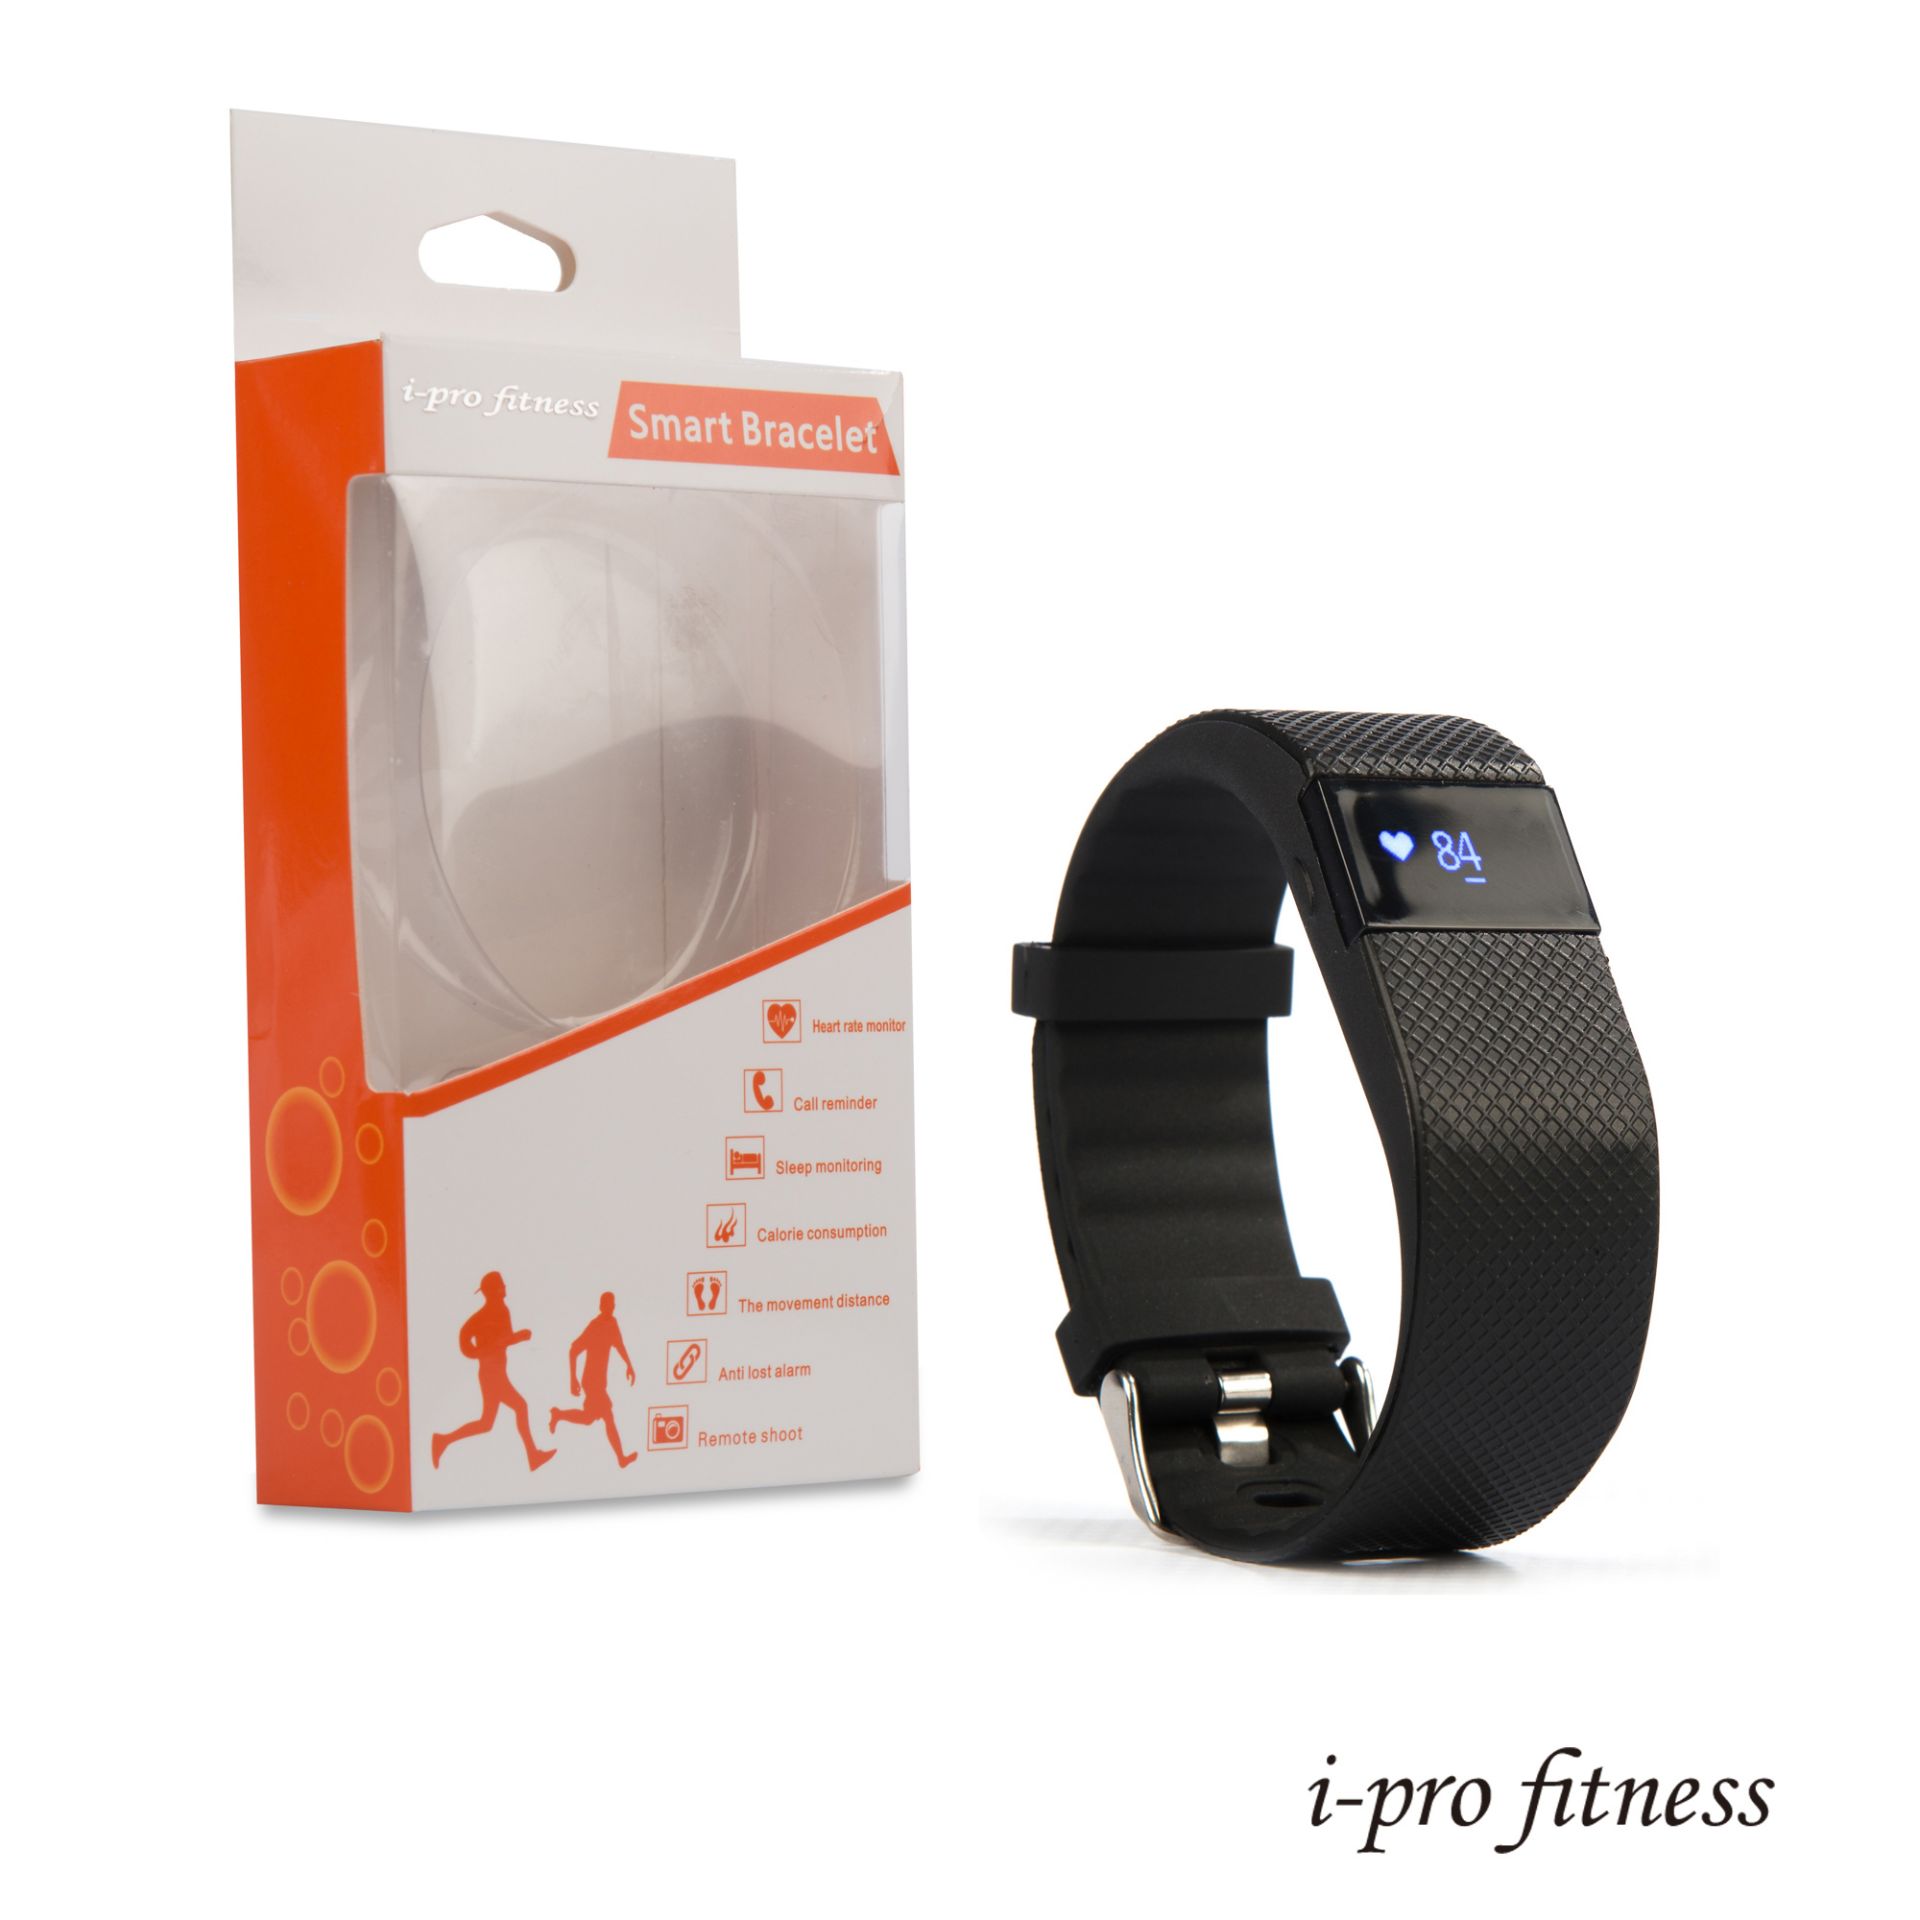 20x Fitness Tracker i-pro fitness, Bluetooth 4.0 Sports Smart Bracelet, Heart Rate Monitor - Image 2 of 8